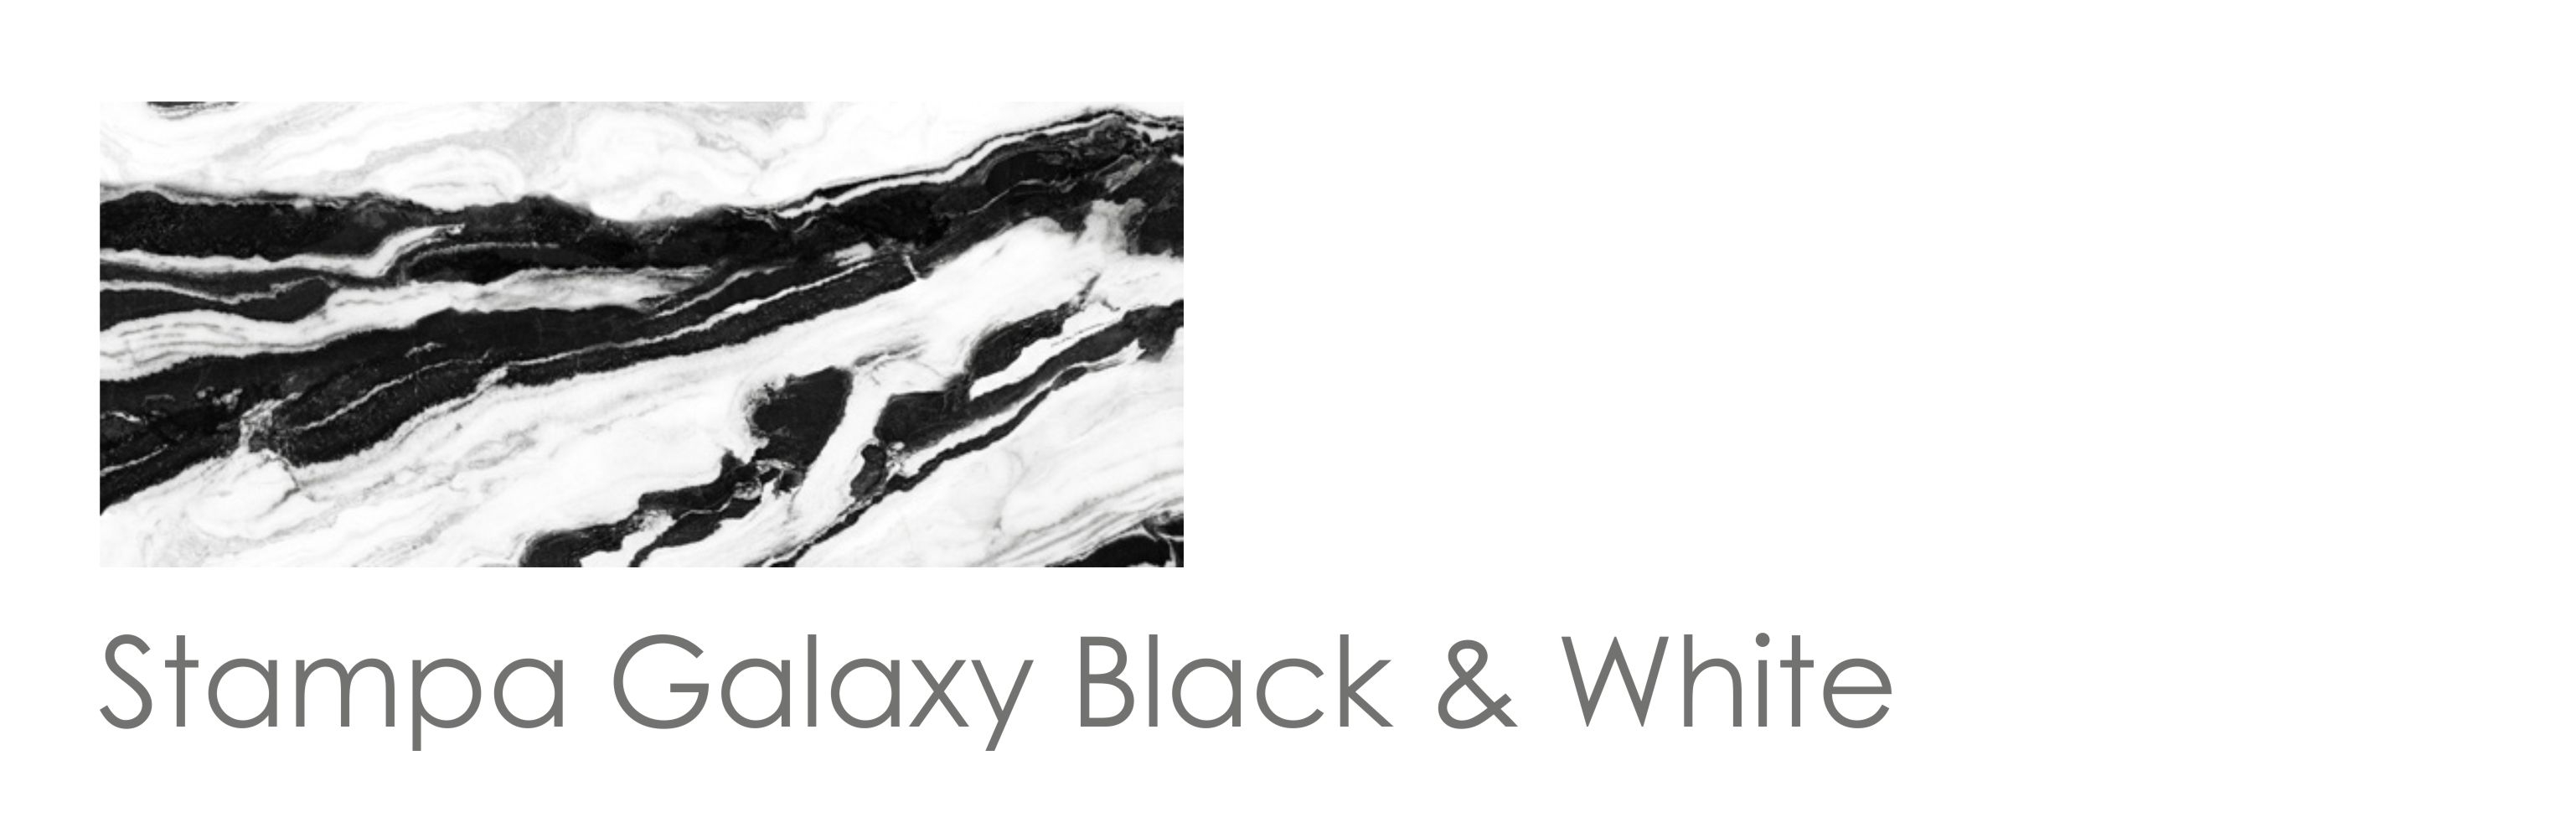 Стекло Galaxy Black & White